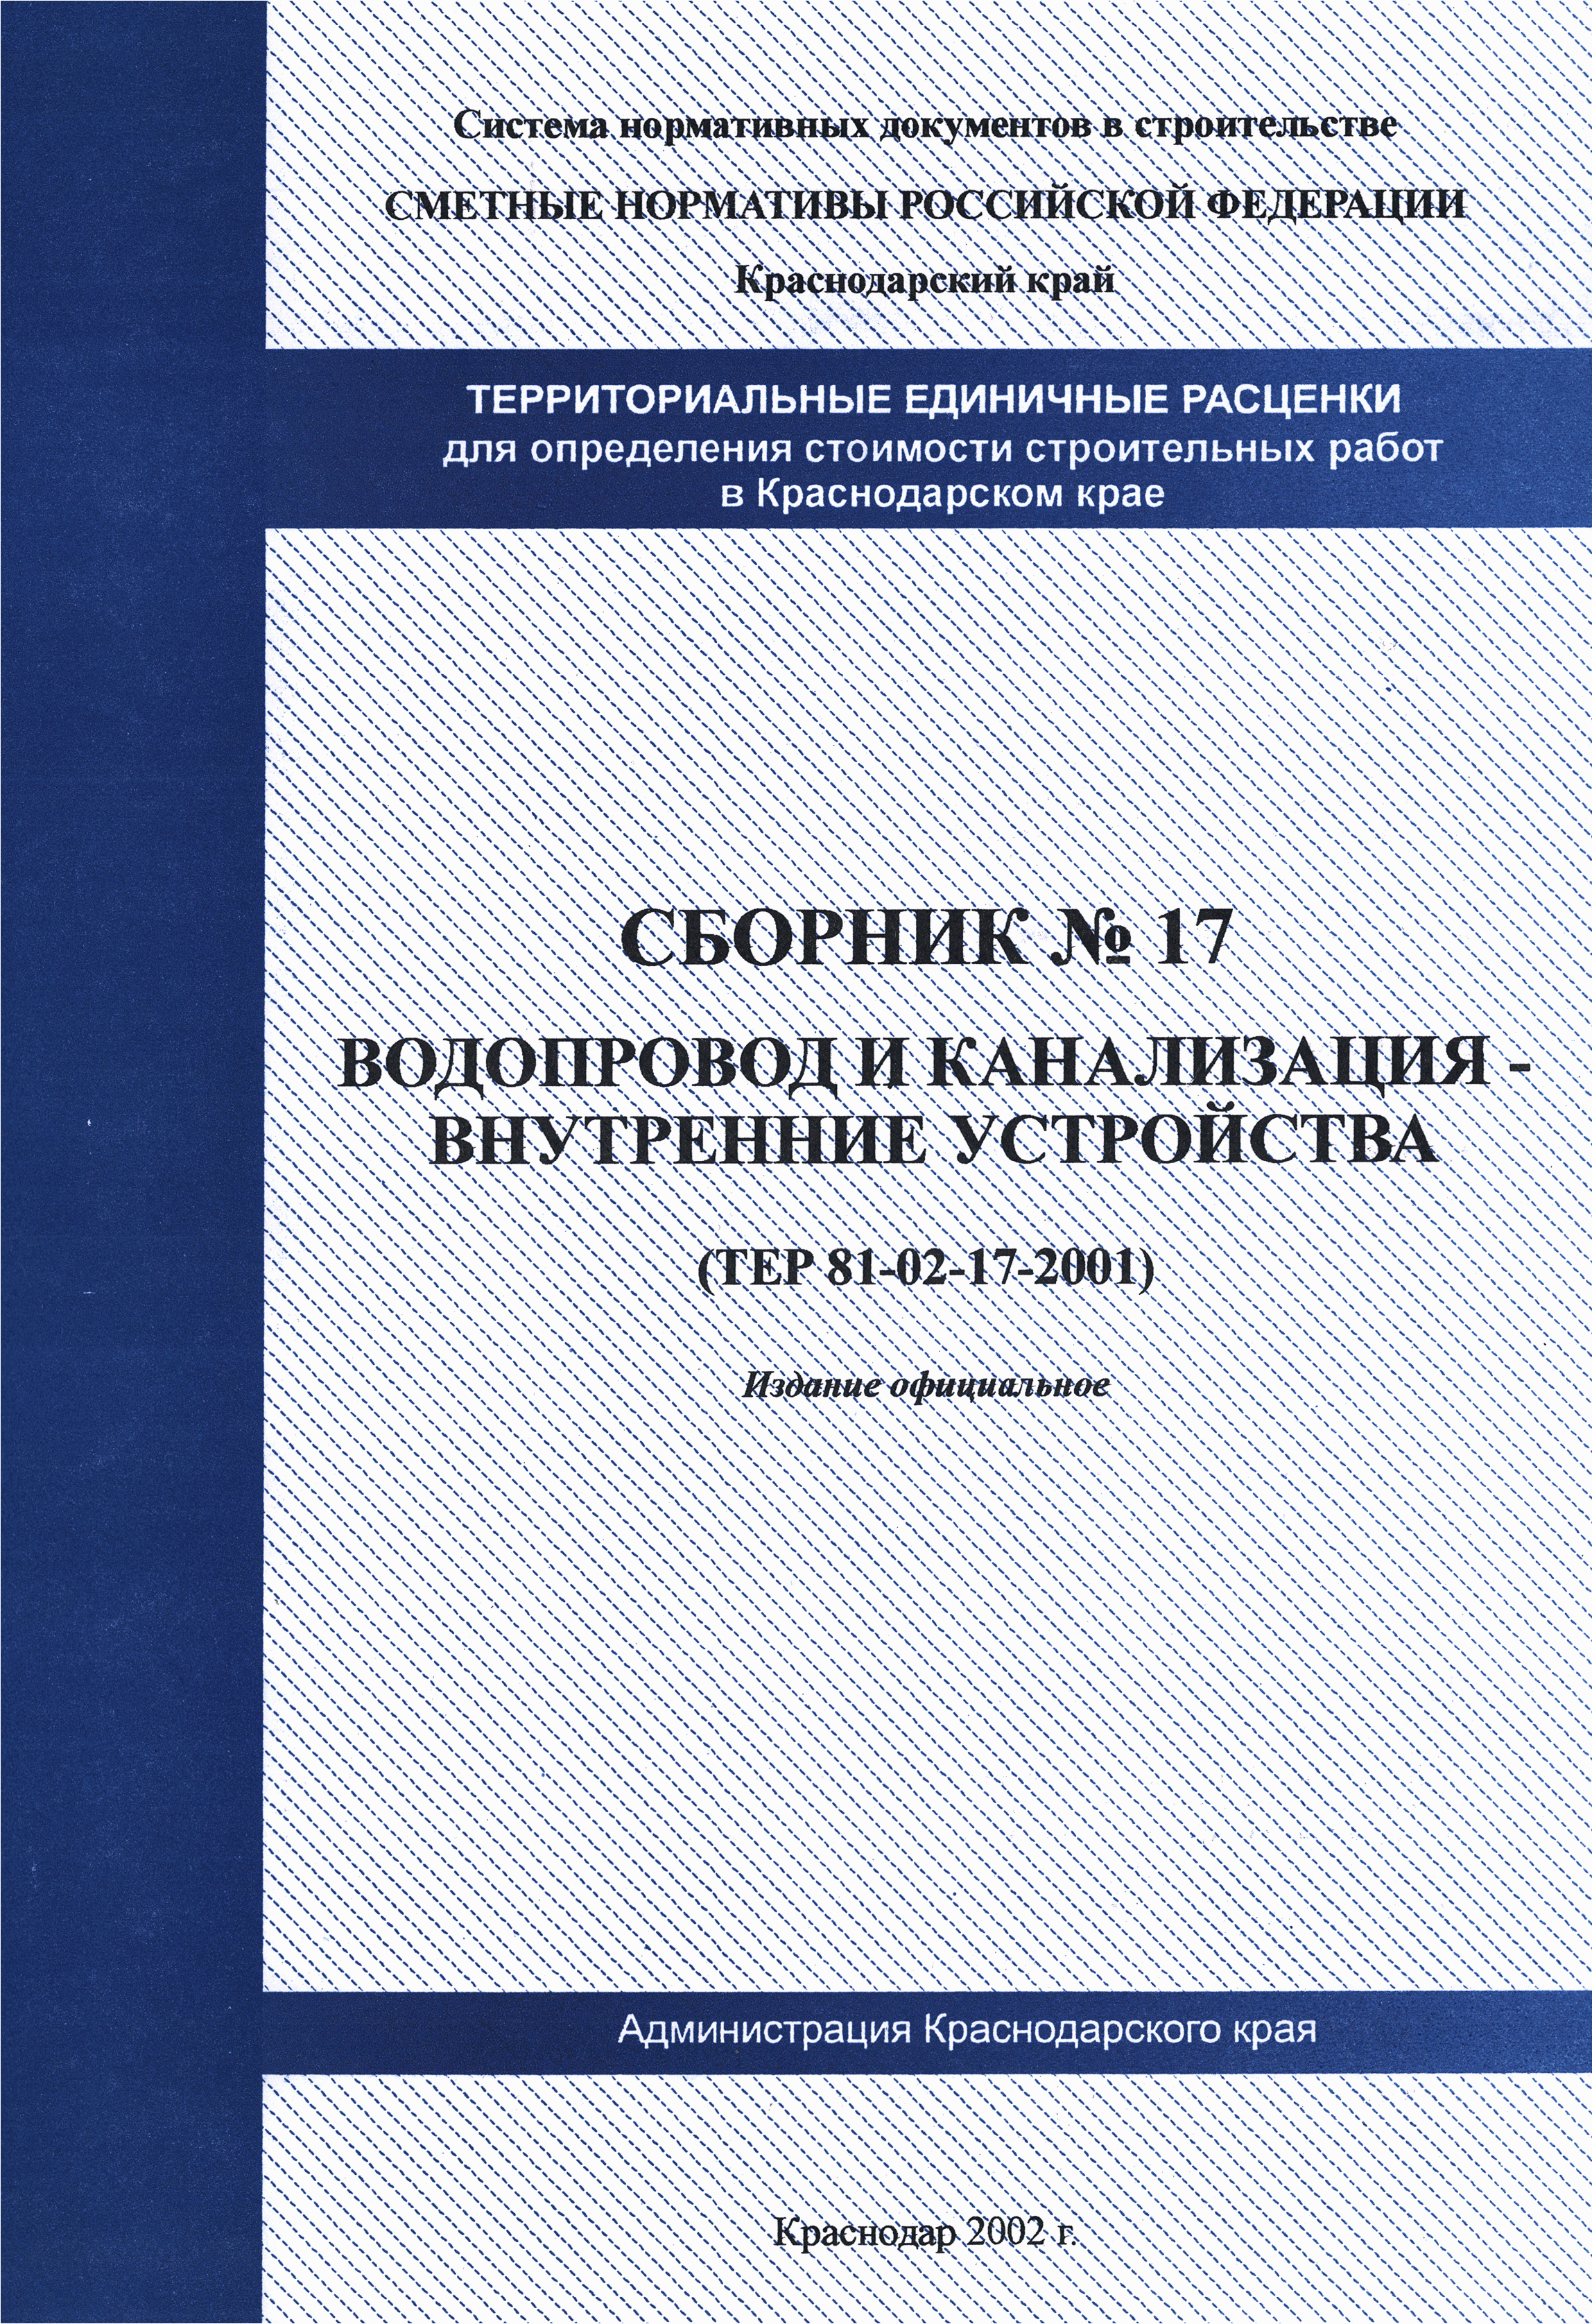 ТЕР Краснодарского края 2001-17